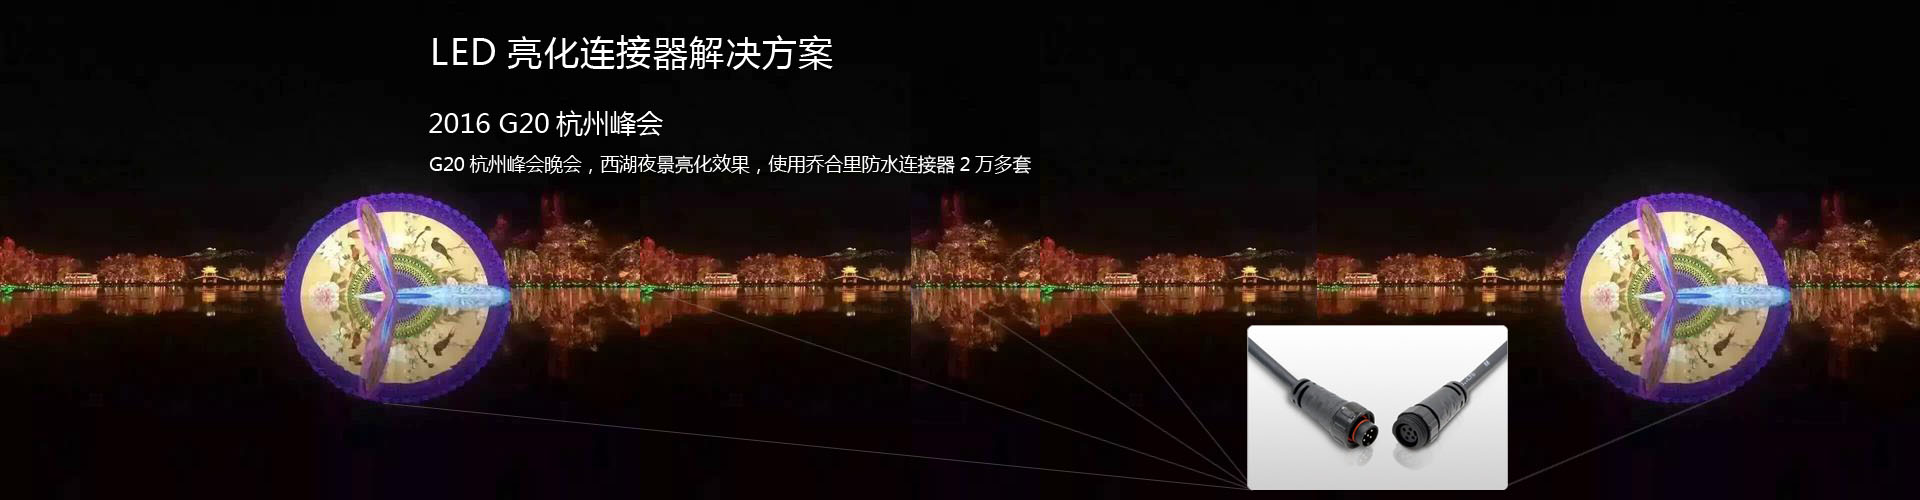 2016 G20杭州峰会使用乔合里连接器2万多套